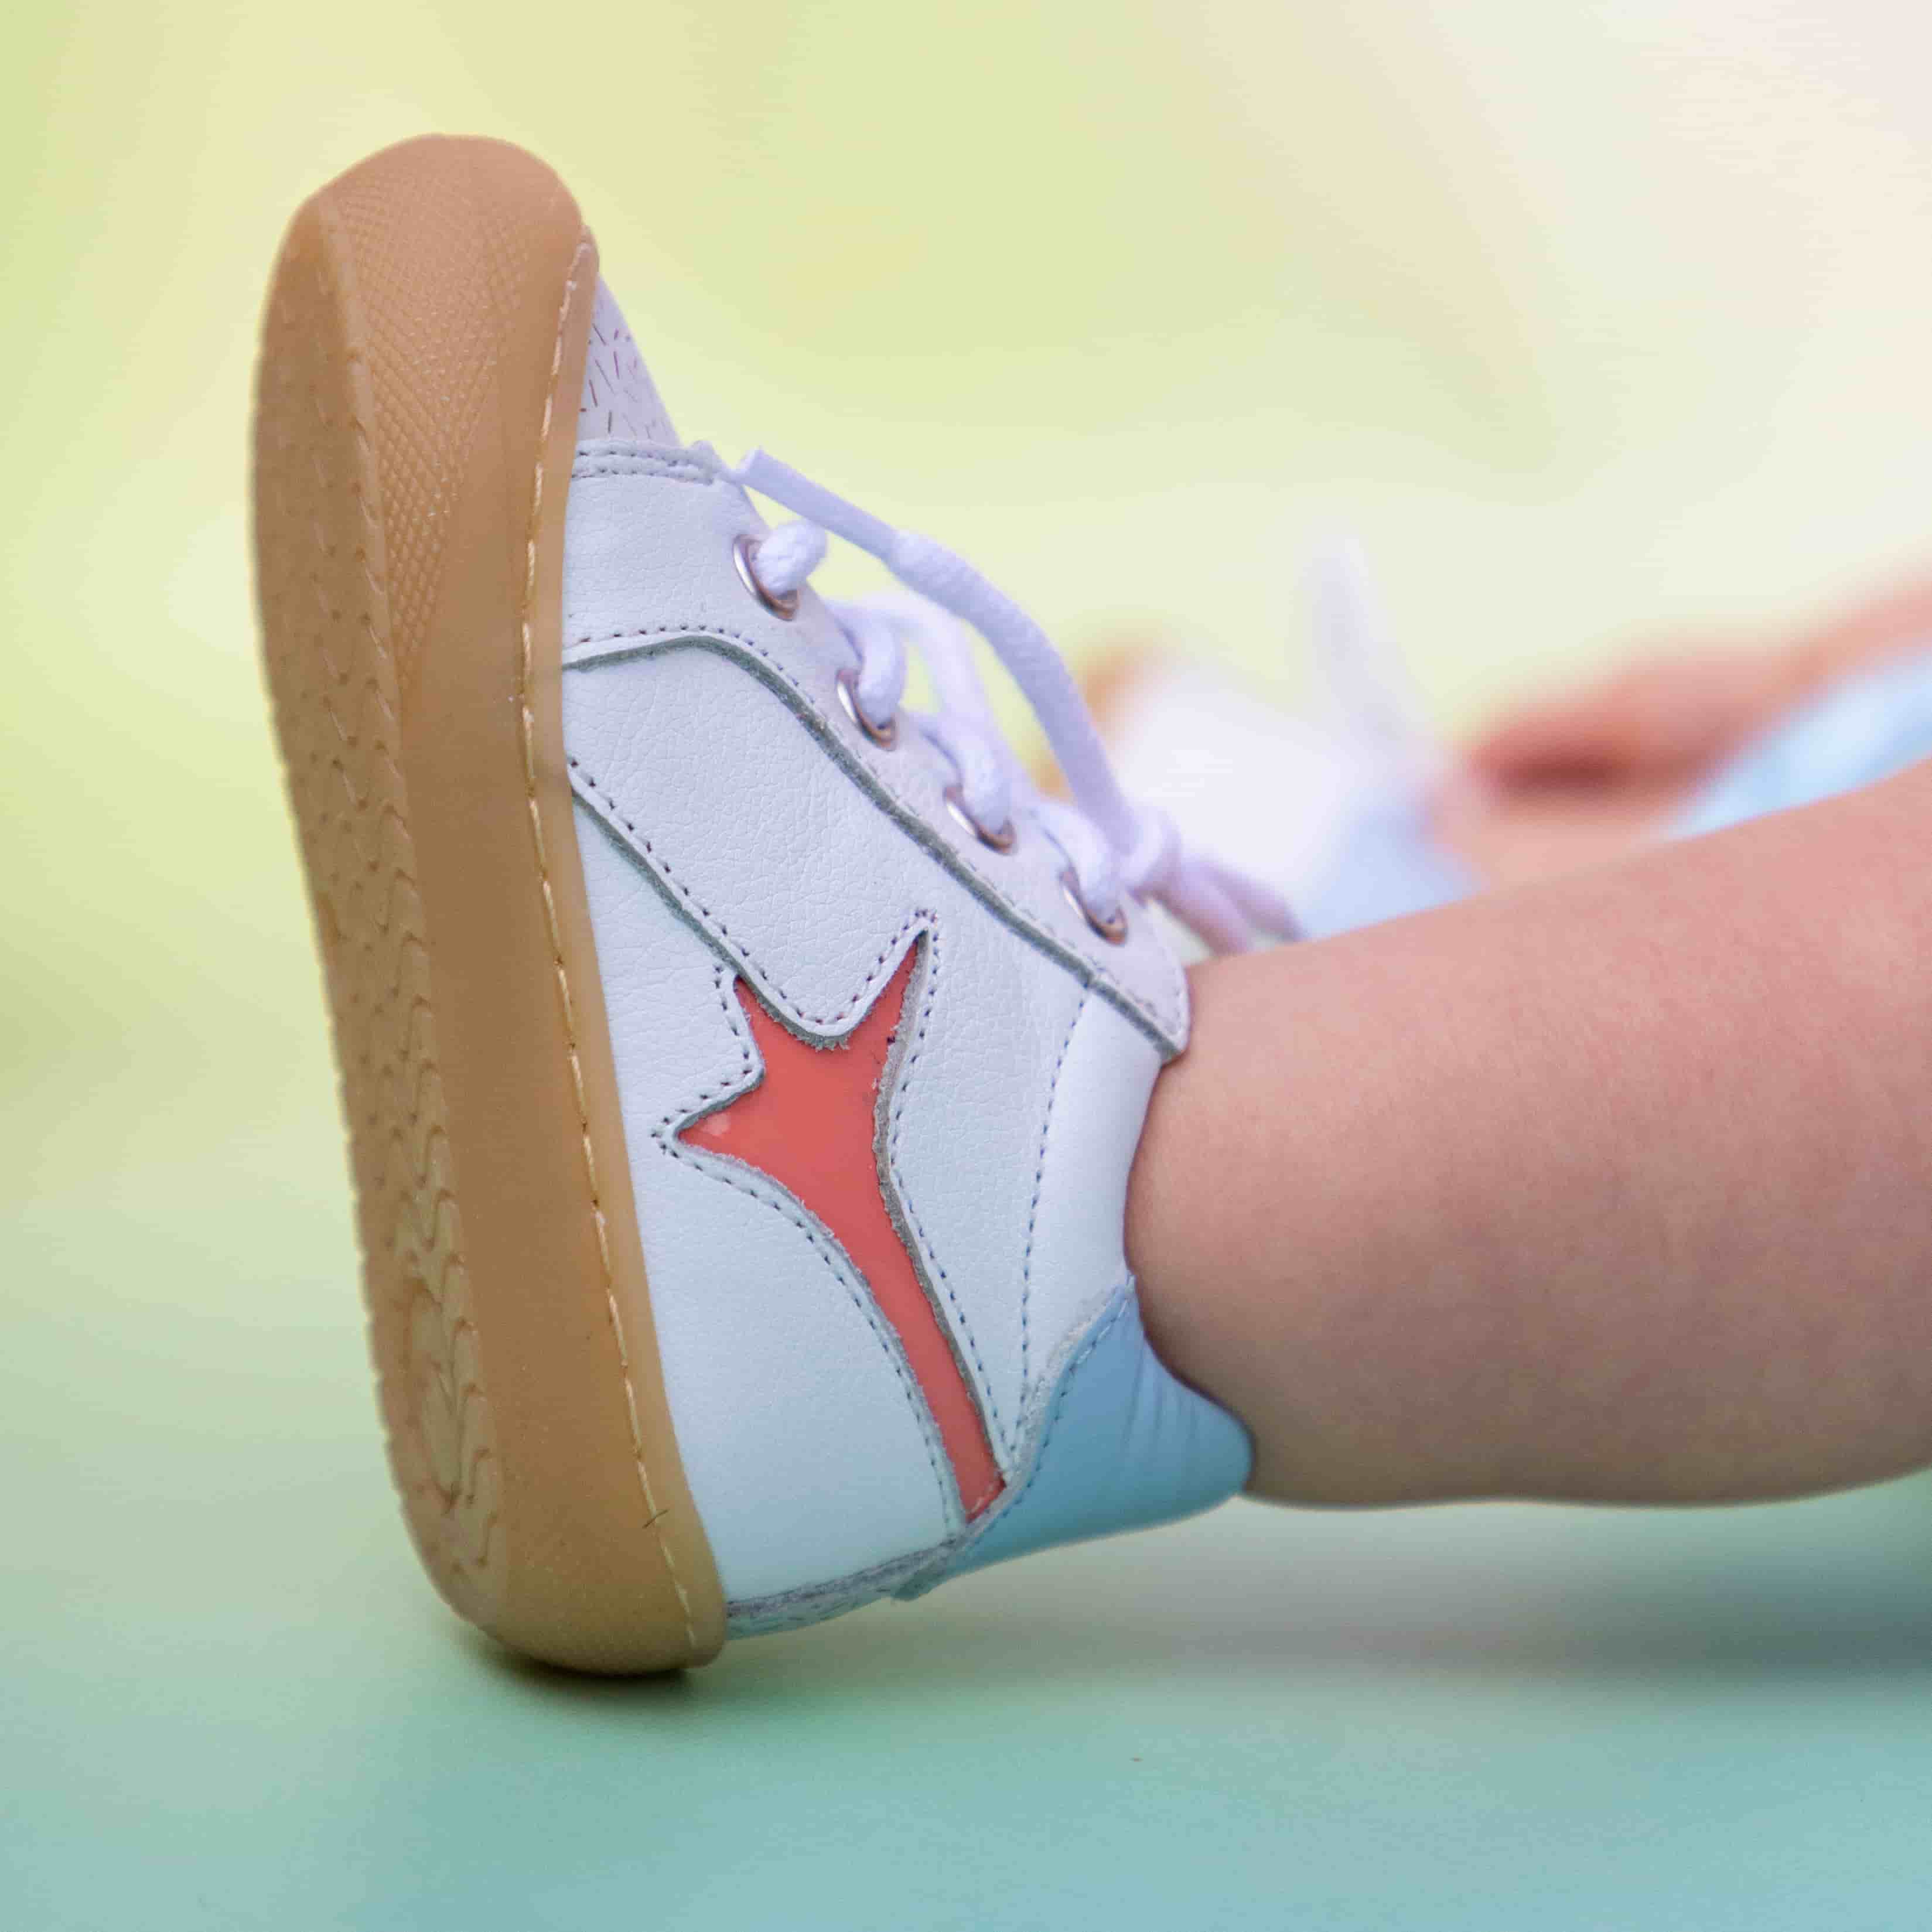 Chaussure souple bebe : notre gamme Flexibel